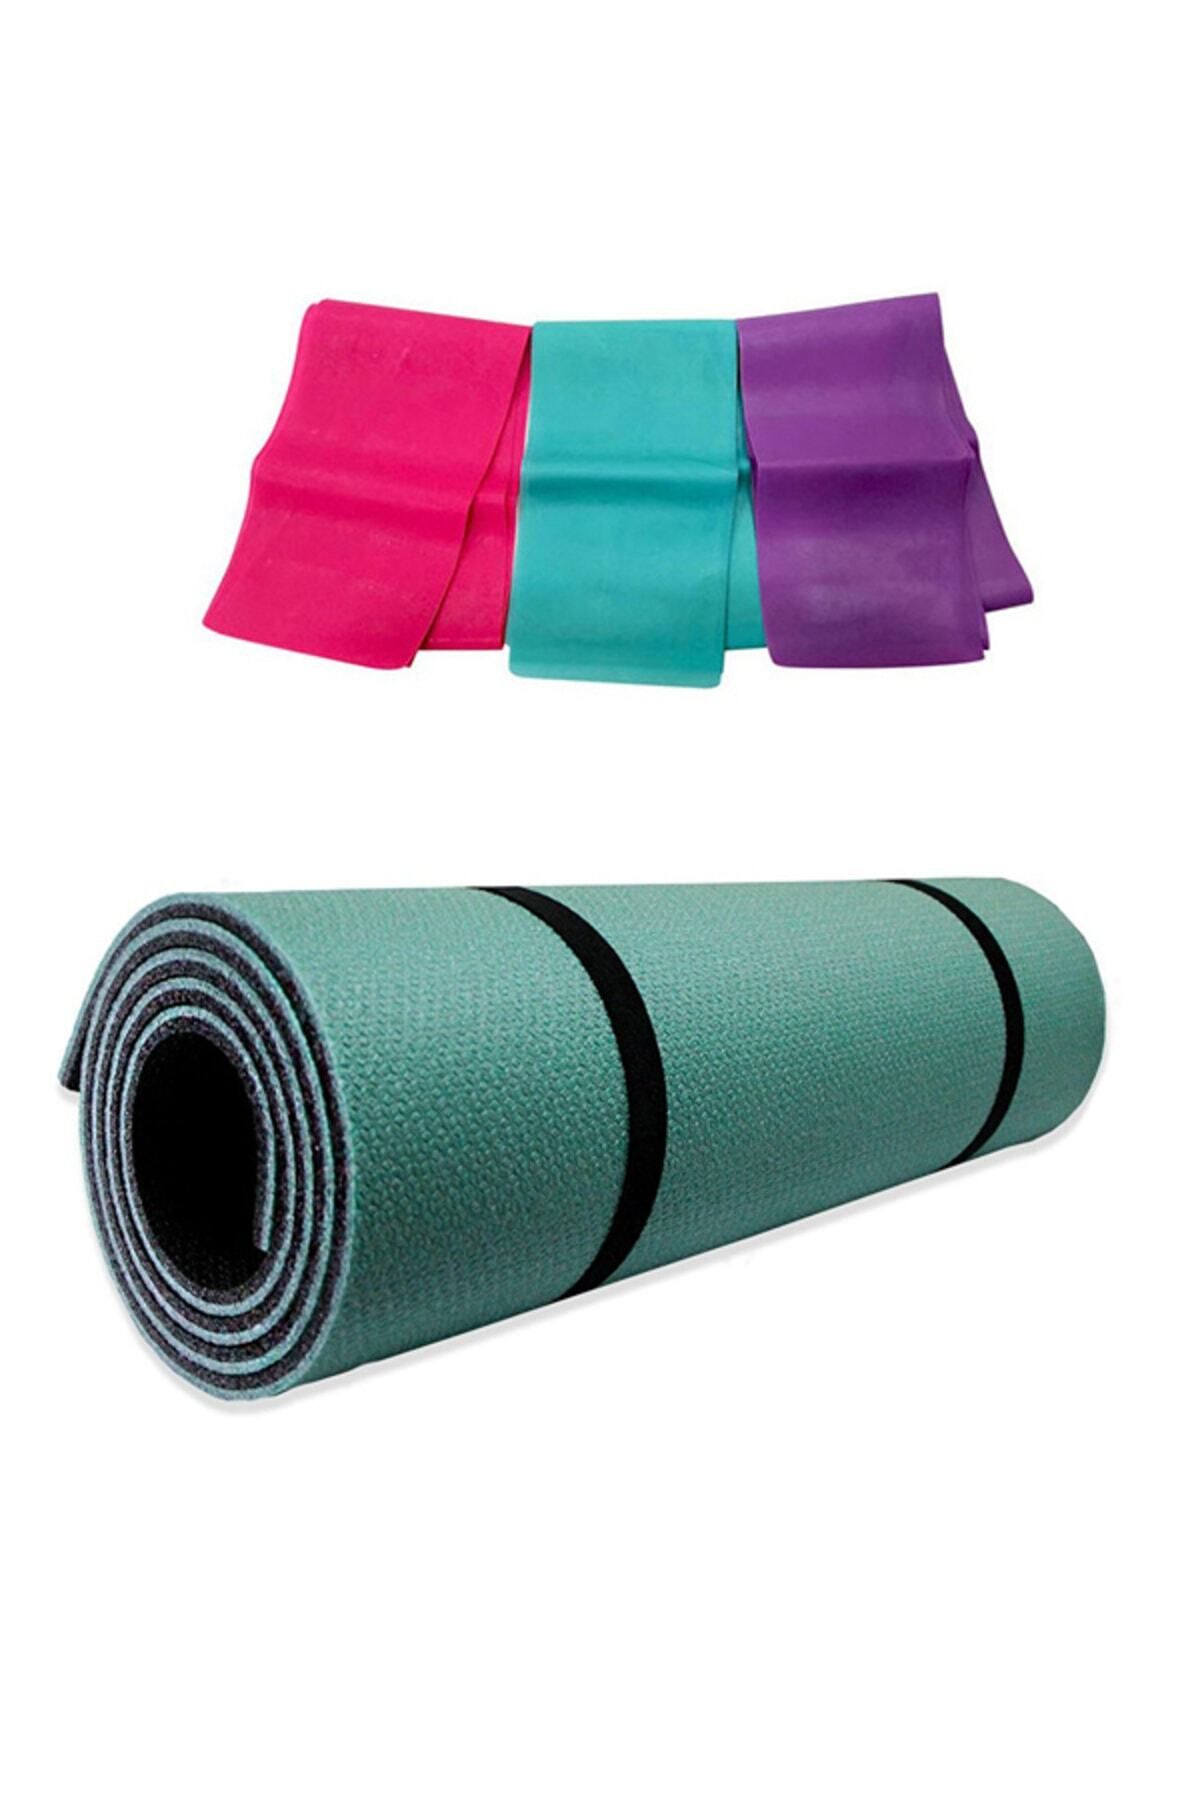 Tayzon 8mm Haki Pilates Minderi & Yoga Mat Çift Taraflı Plates Egzersiz Direnç Lastiği